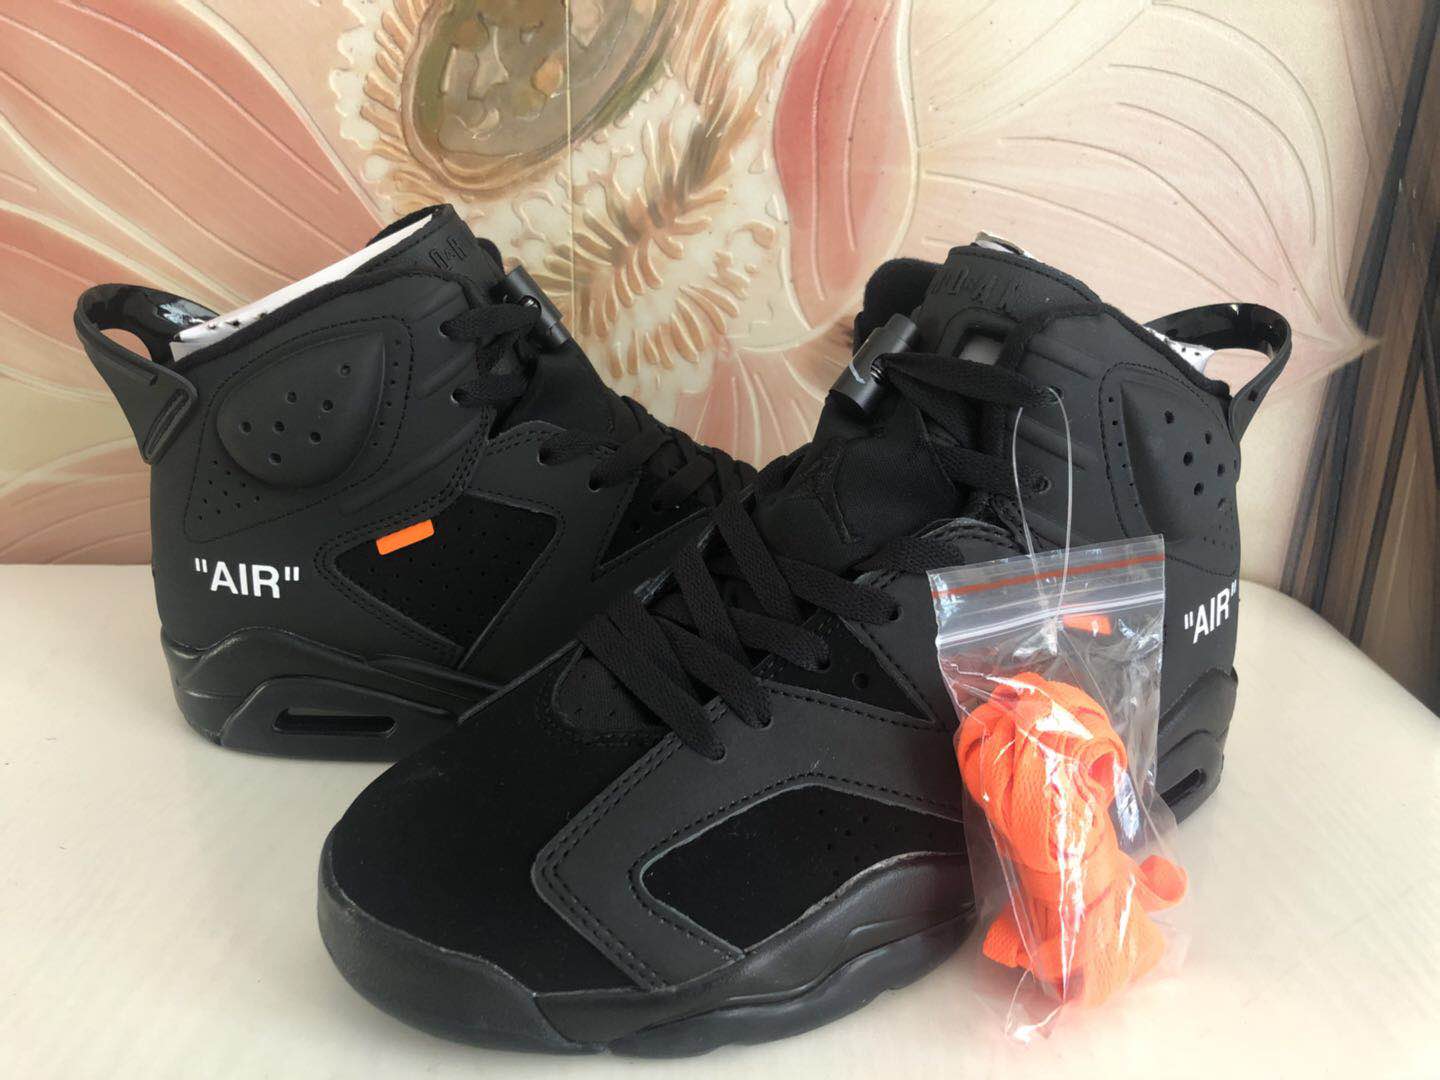 Air Jordan 6 Unique Joint Name Shoes - Click Image to Close